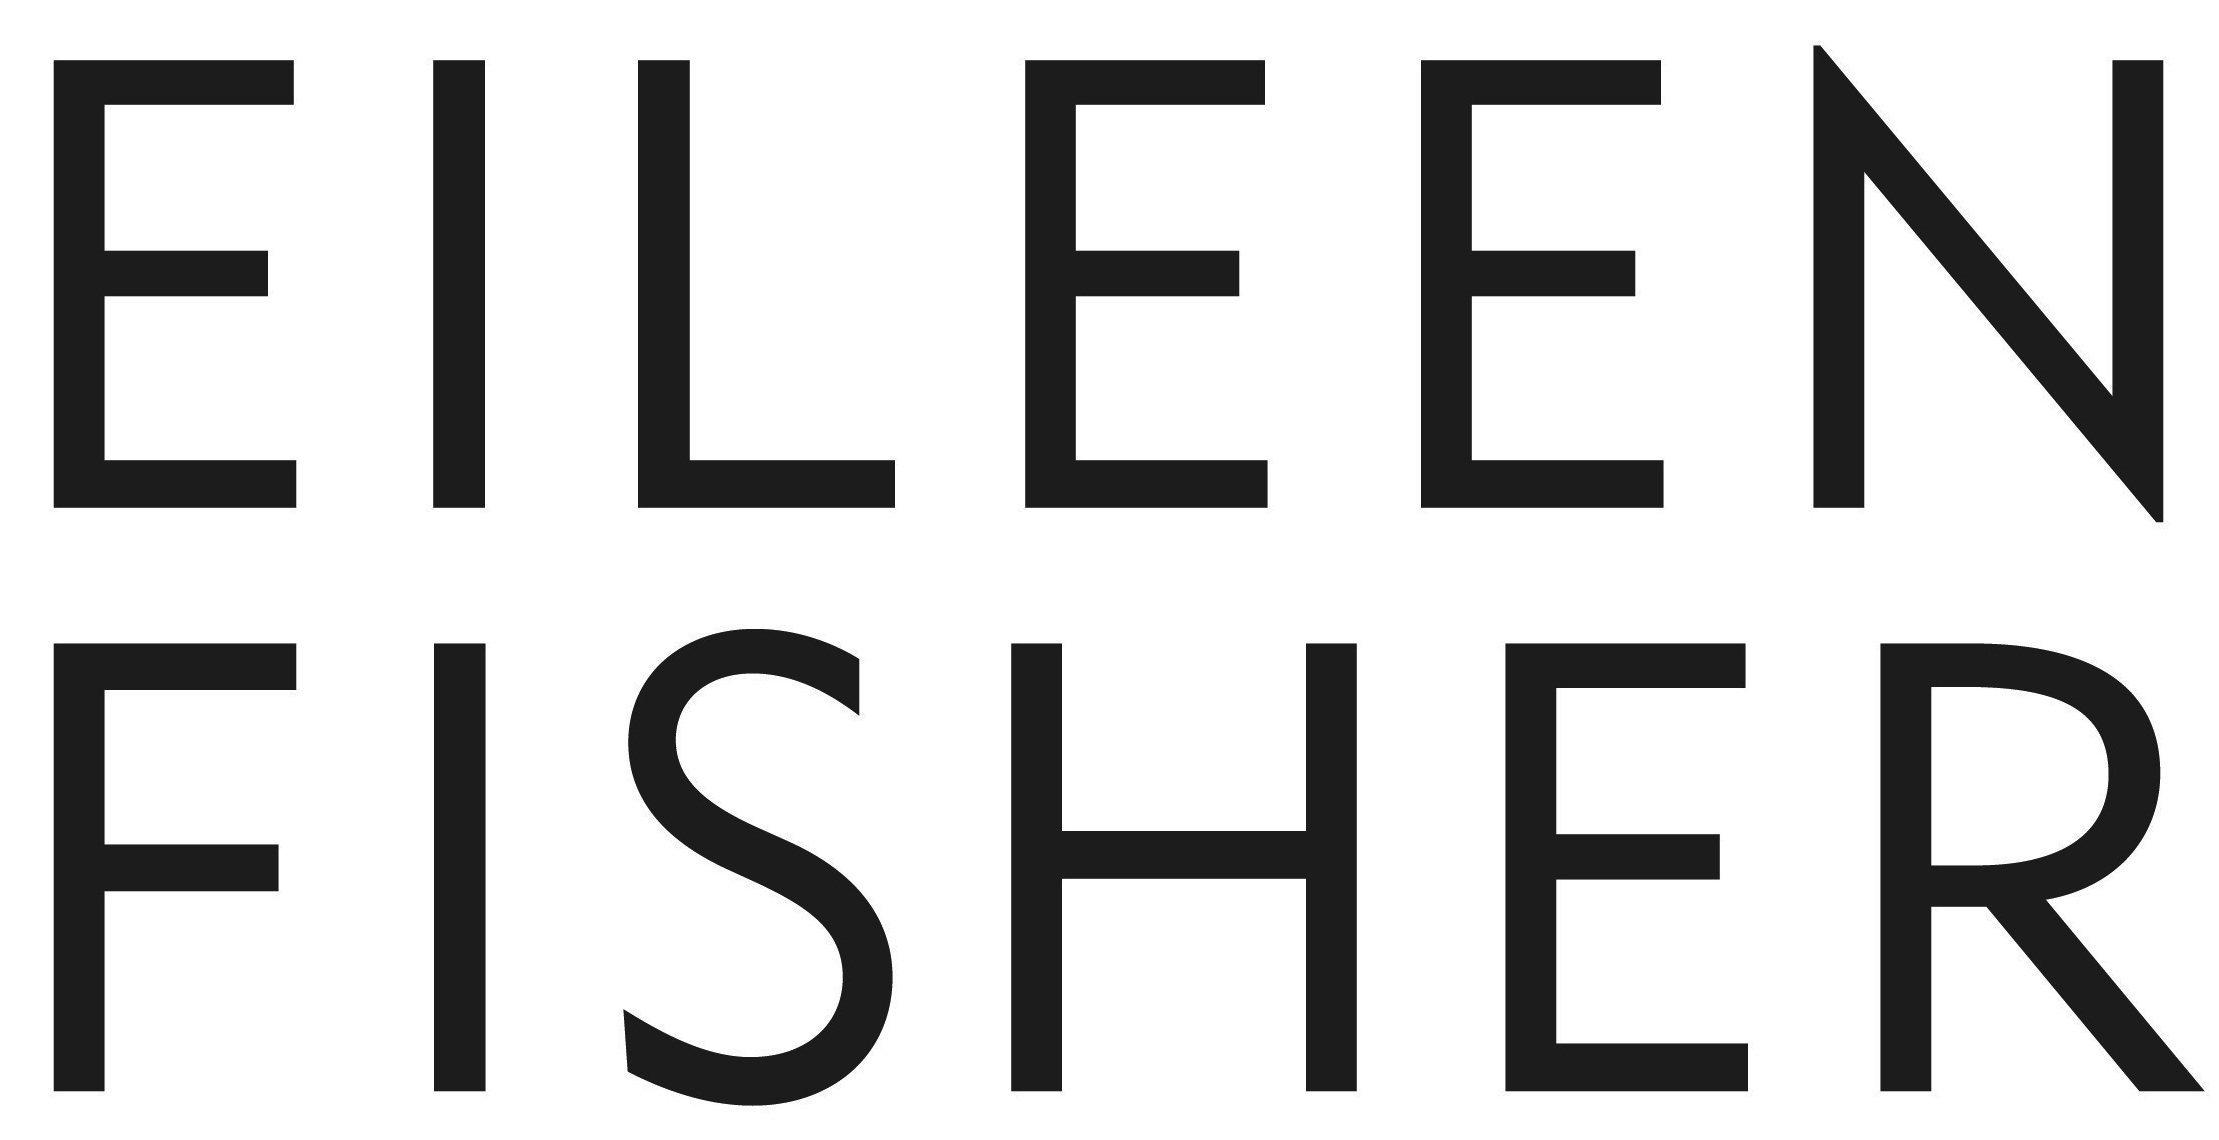 Eileen Fisher Logo